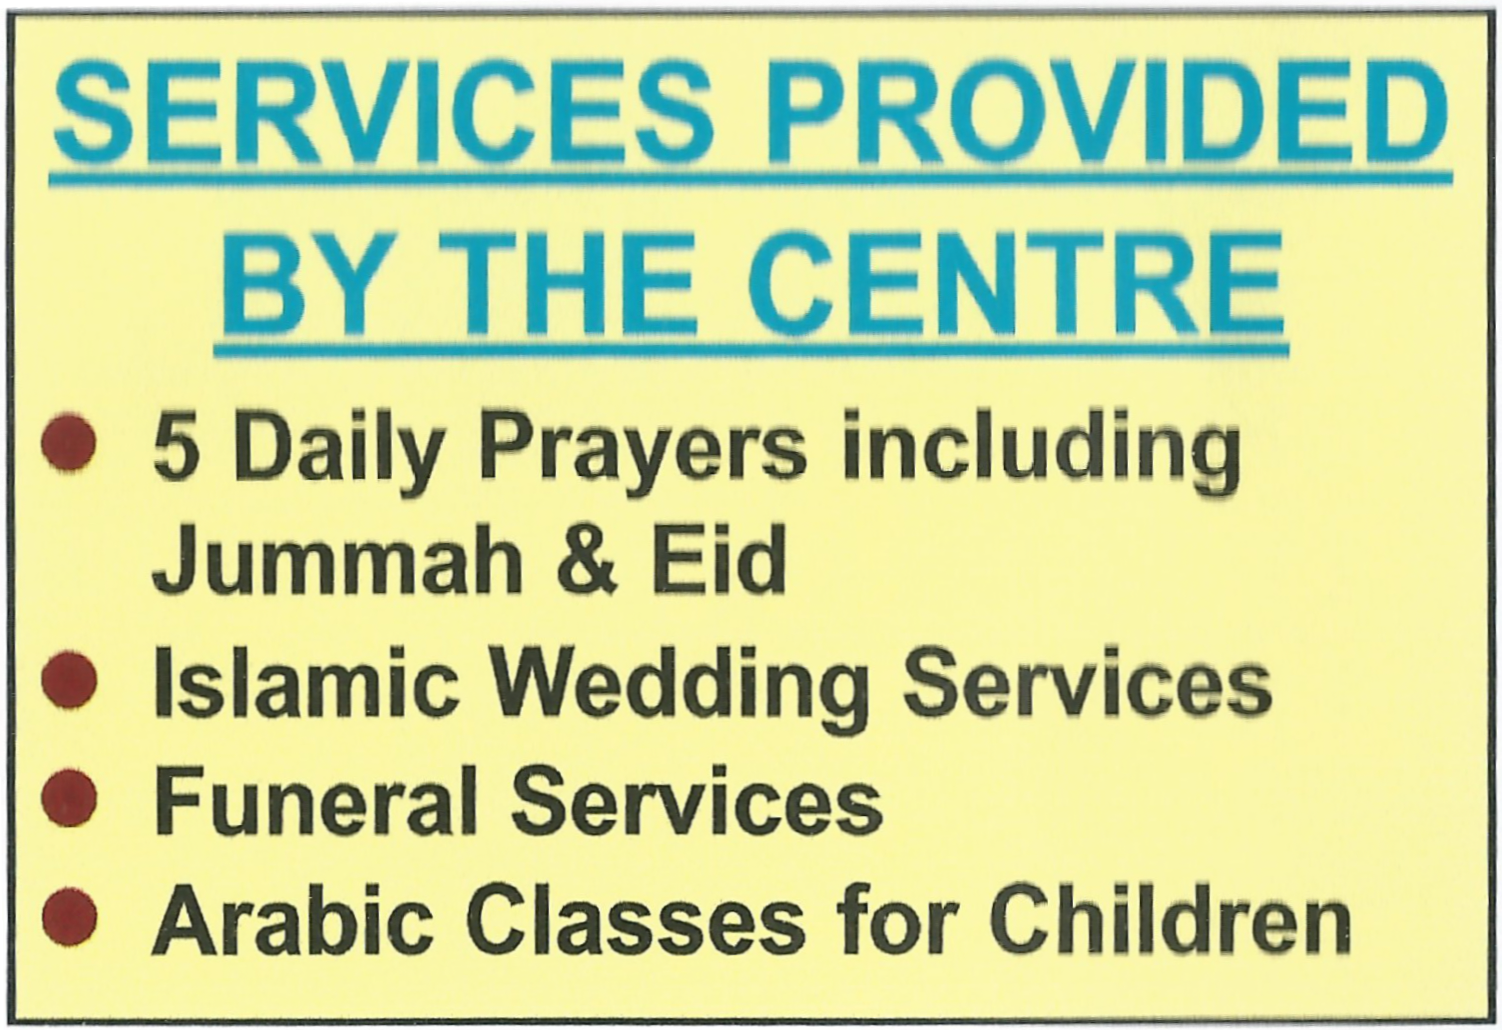 Mid Sussex Islamic Centre & Mosque, fajr, zuhr, asr, maghrib, isha, 5 daily prayers including Jummah & Eid. Islamic Weddings Services, Funeral Services, Arabic Classes for children